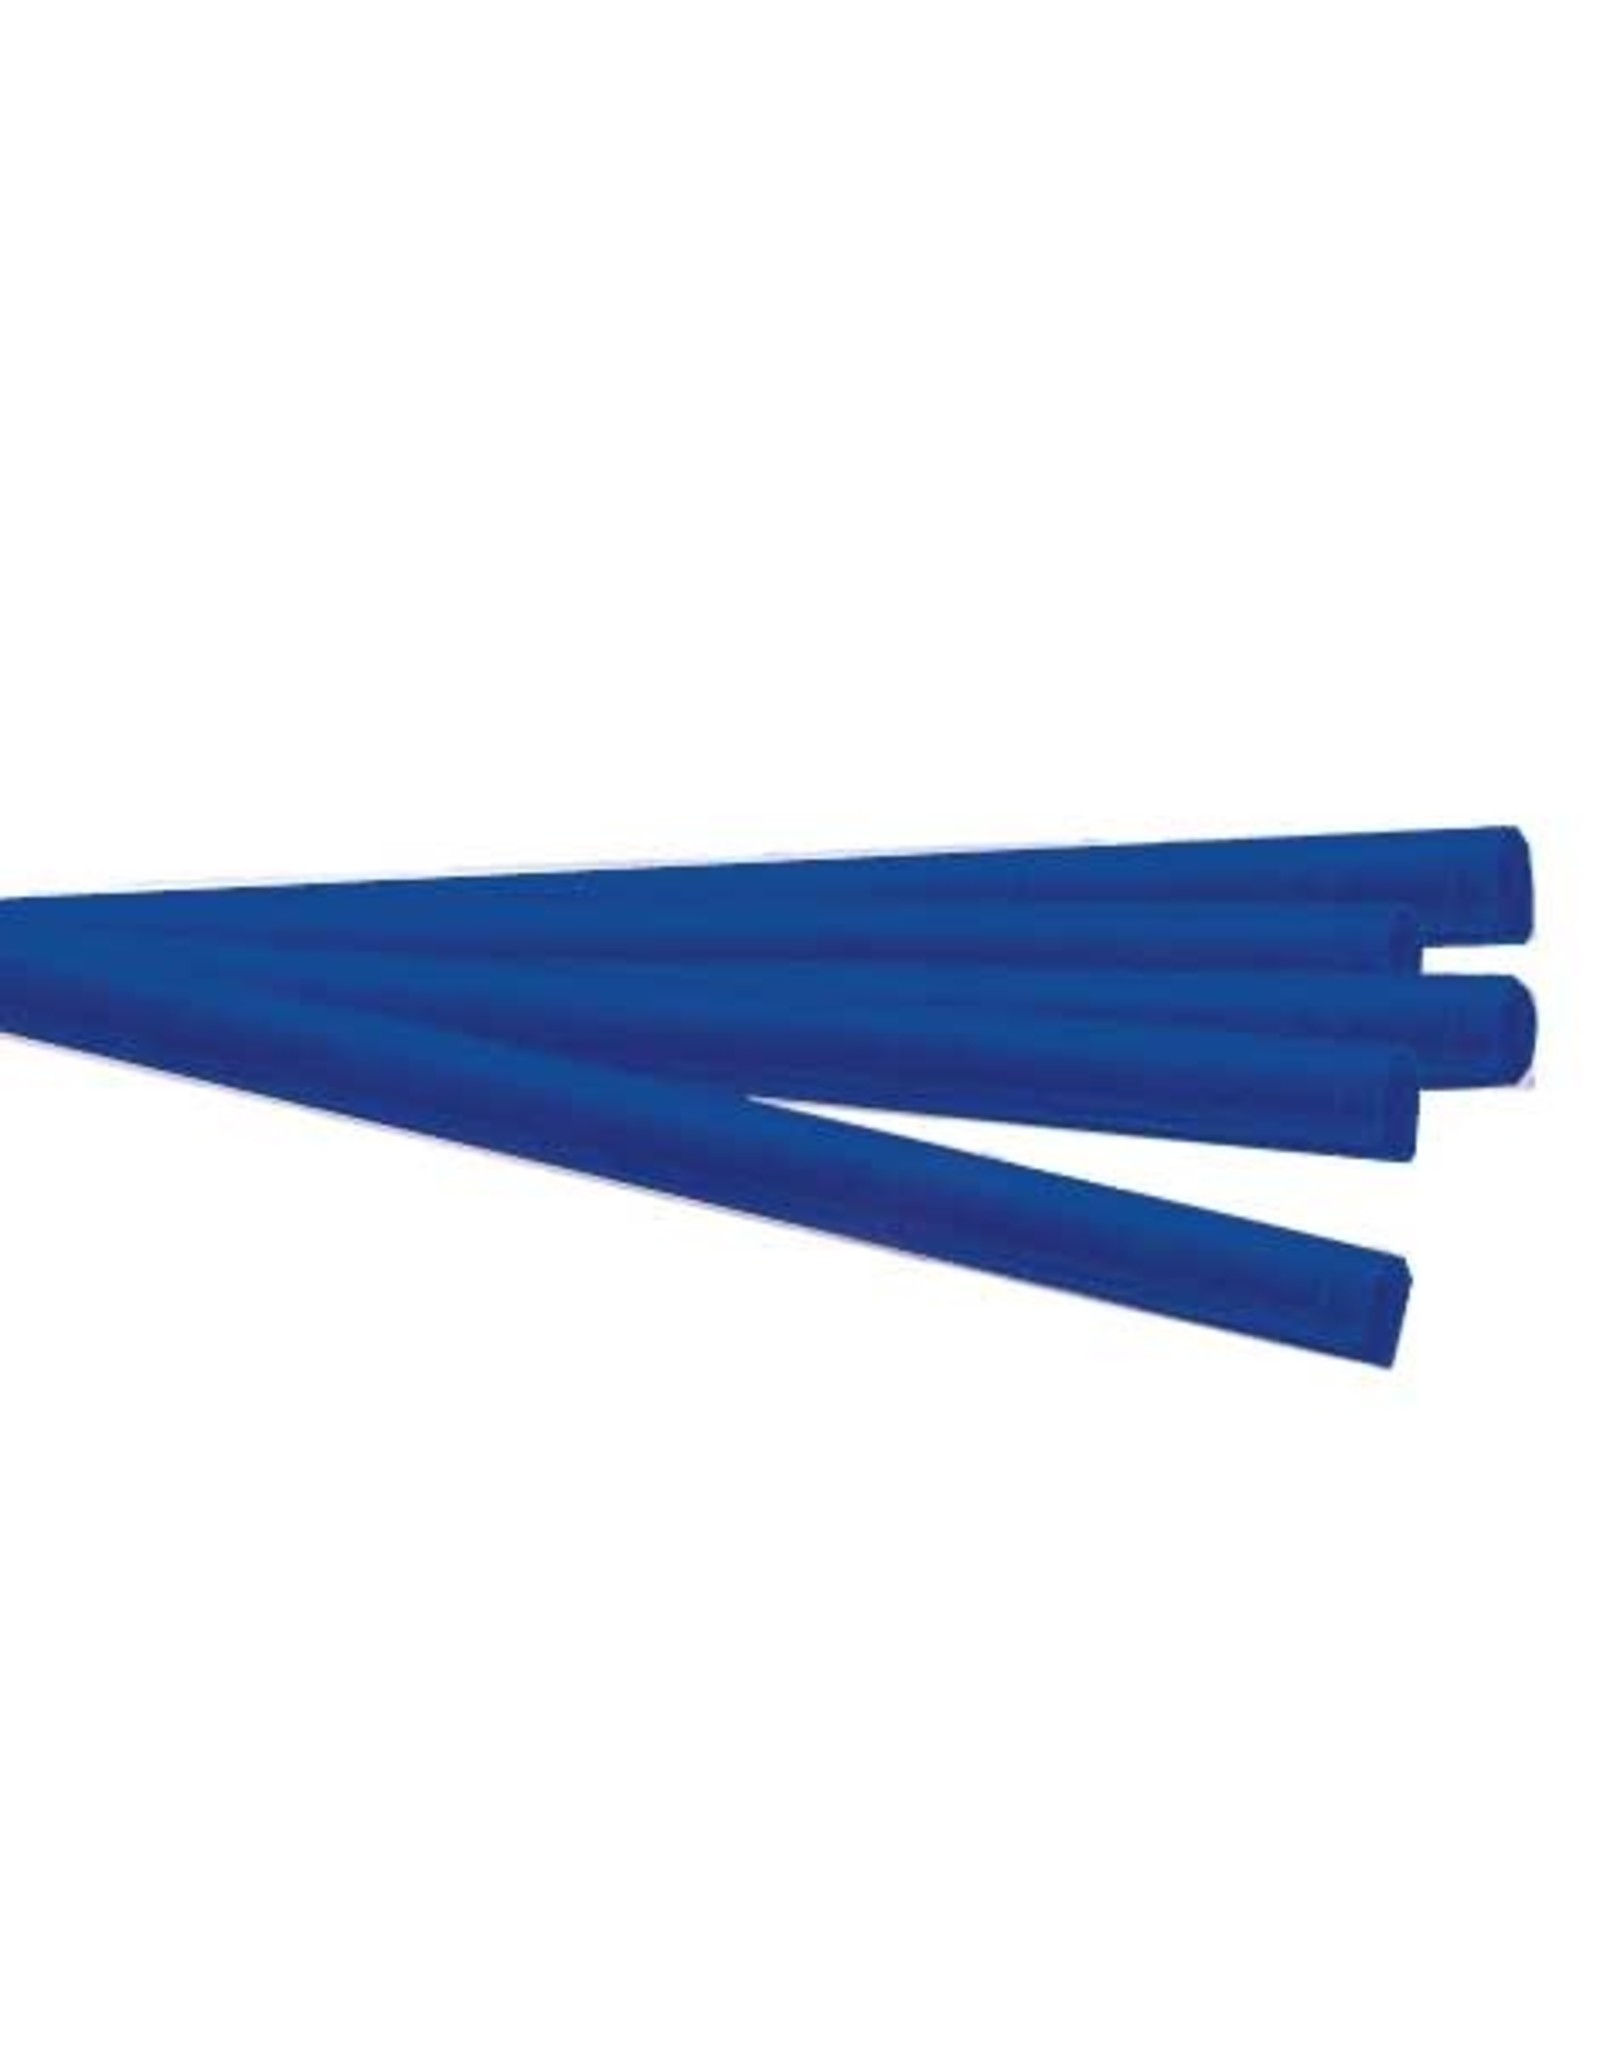 Folia Vliegerpapier Blauw Transparant  70X100  cm  1 rol